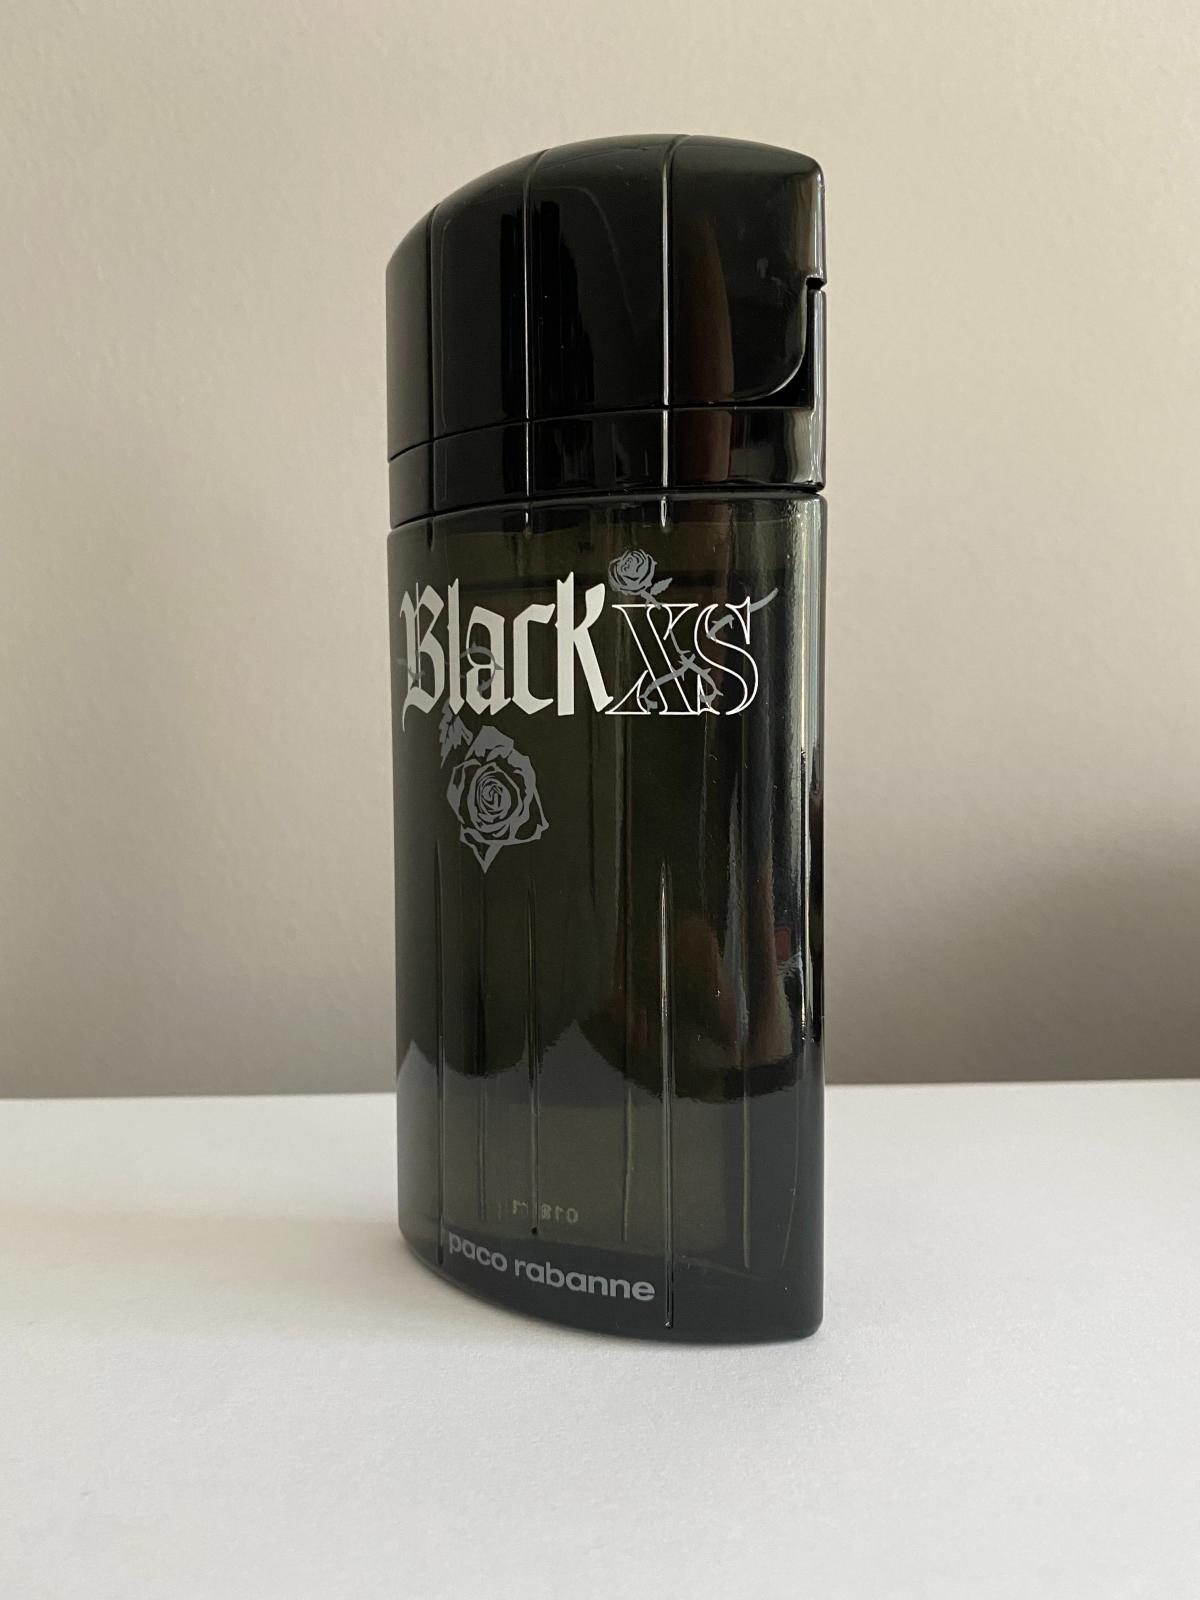 Black XS Paco Rabanne cologne - a fragrance for men 2005